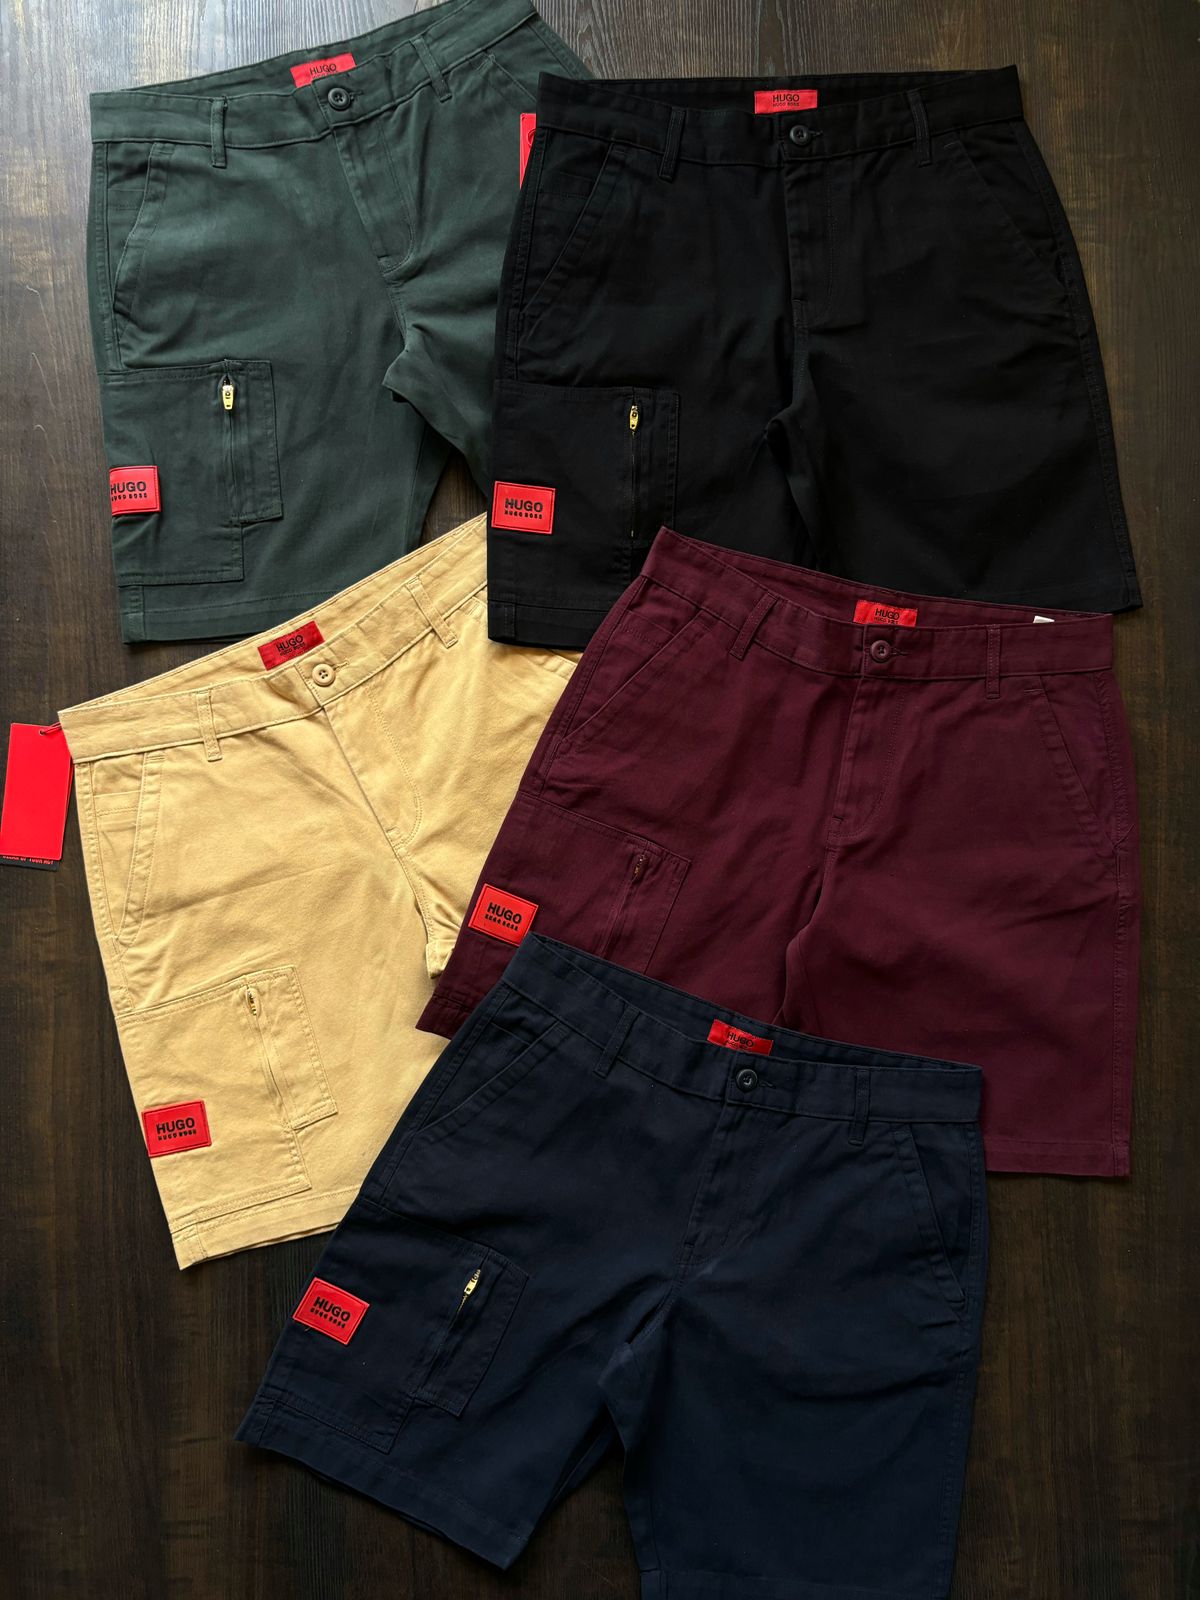 SOB GUH Navy Colour Premium Quality Cotton Shorts 95224